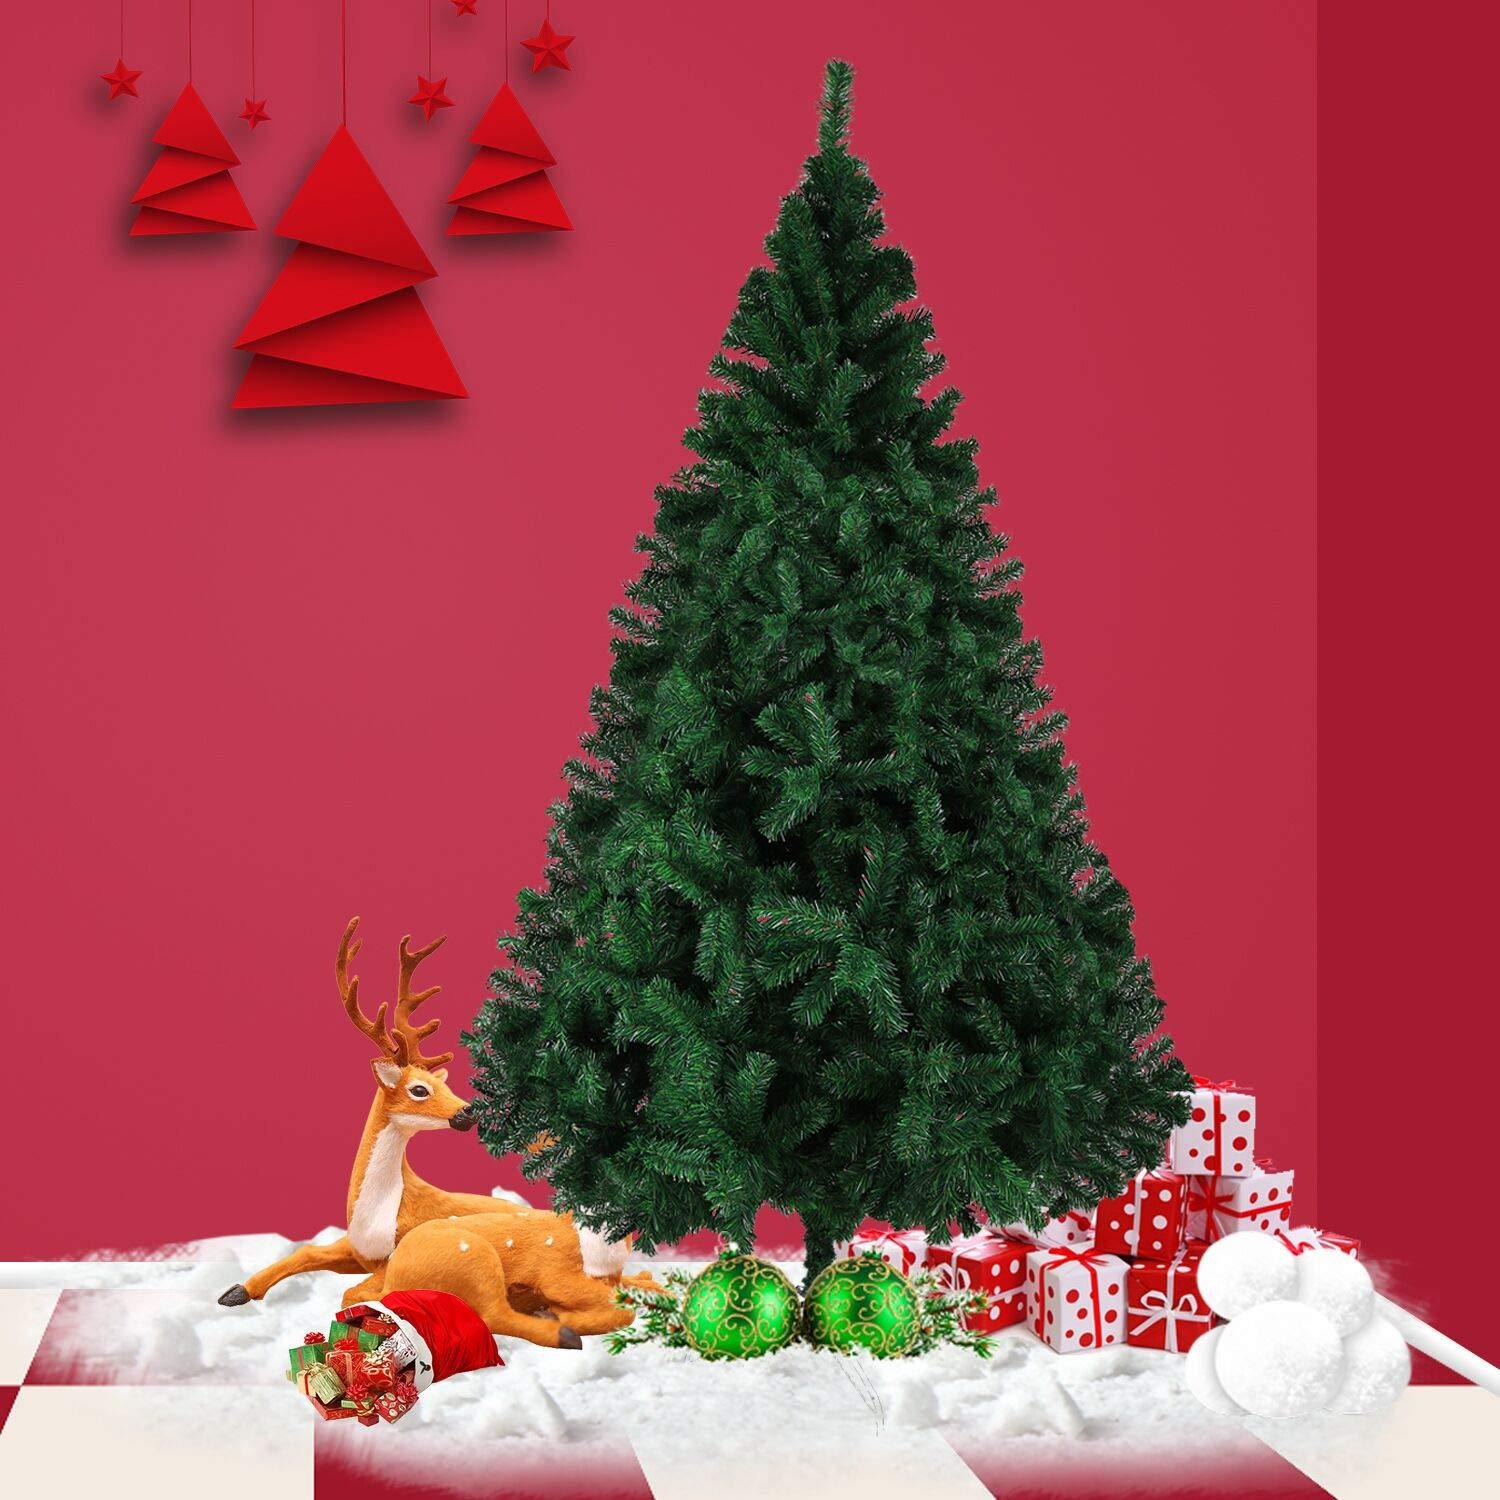 Bosonshop 6' Premium Spruce Artificial Christmas Tree w/Metal Stand, Green